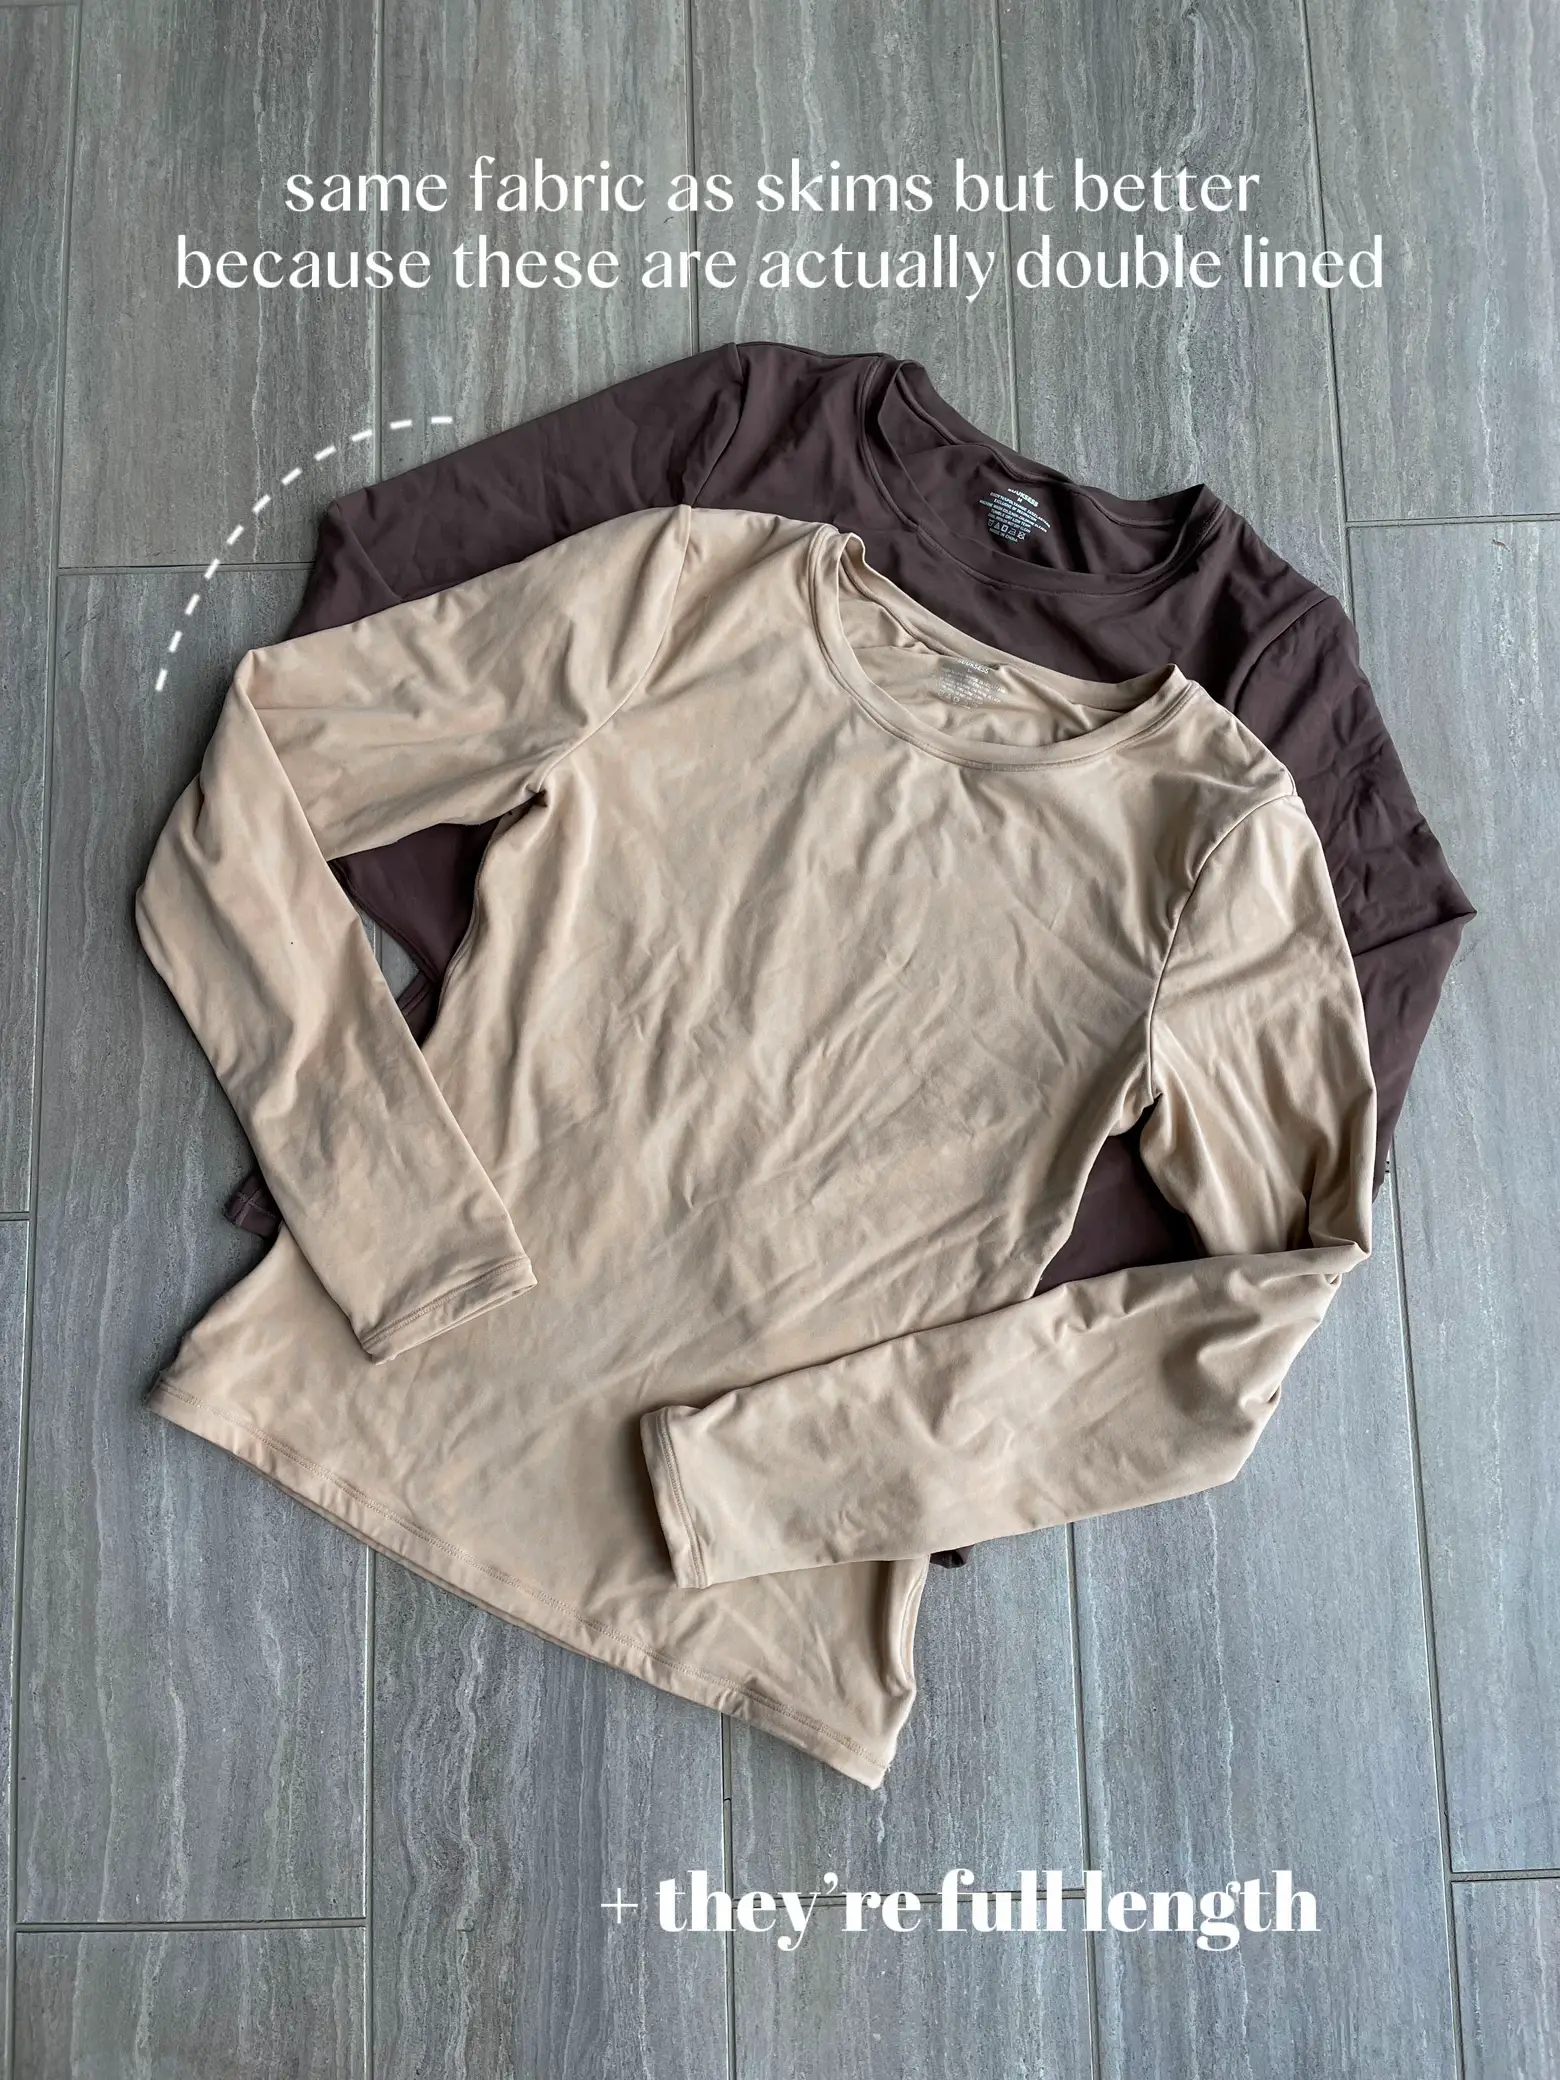 SKIMS Grey Cozy Knit Teddy Jogger Lounge Pants Size S/M - $85 New